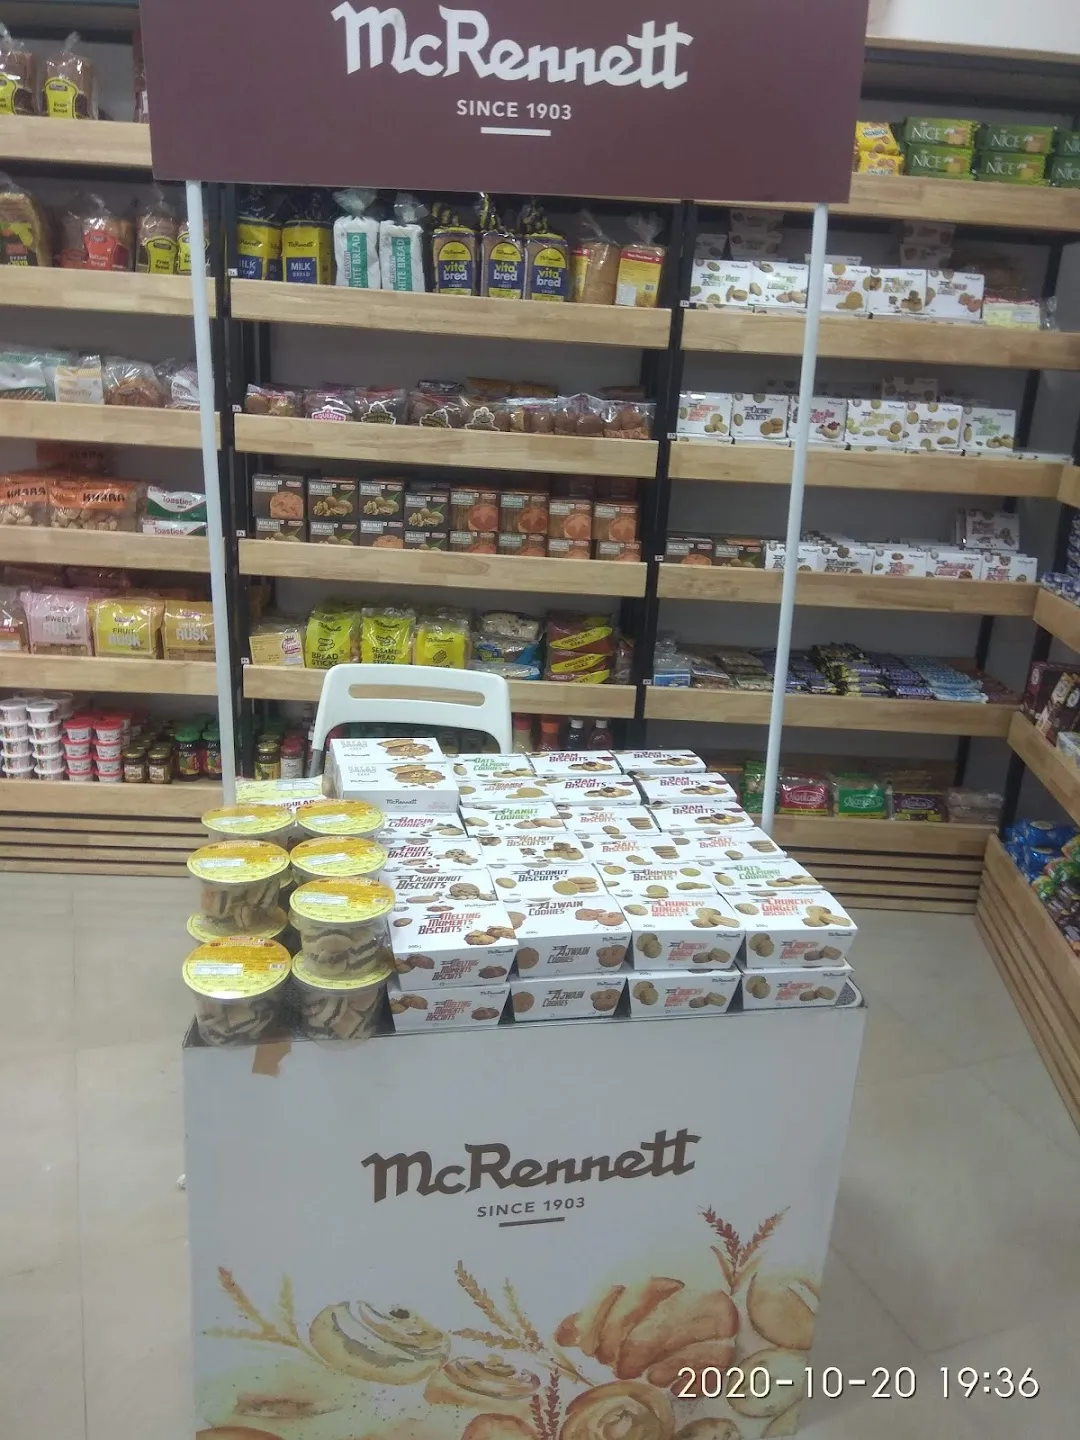 Mcrennett in Anna Nagar,Chennai - Order Food Online - Best Bakeries in  Chennai - Justdial